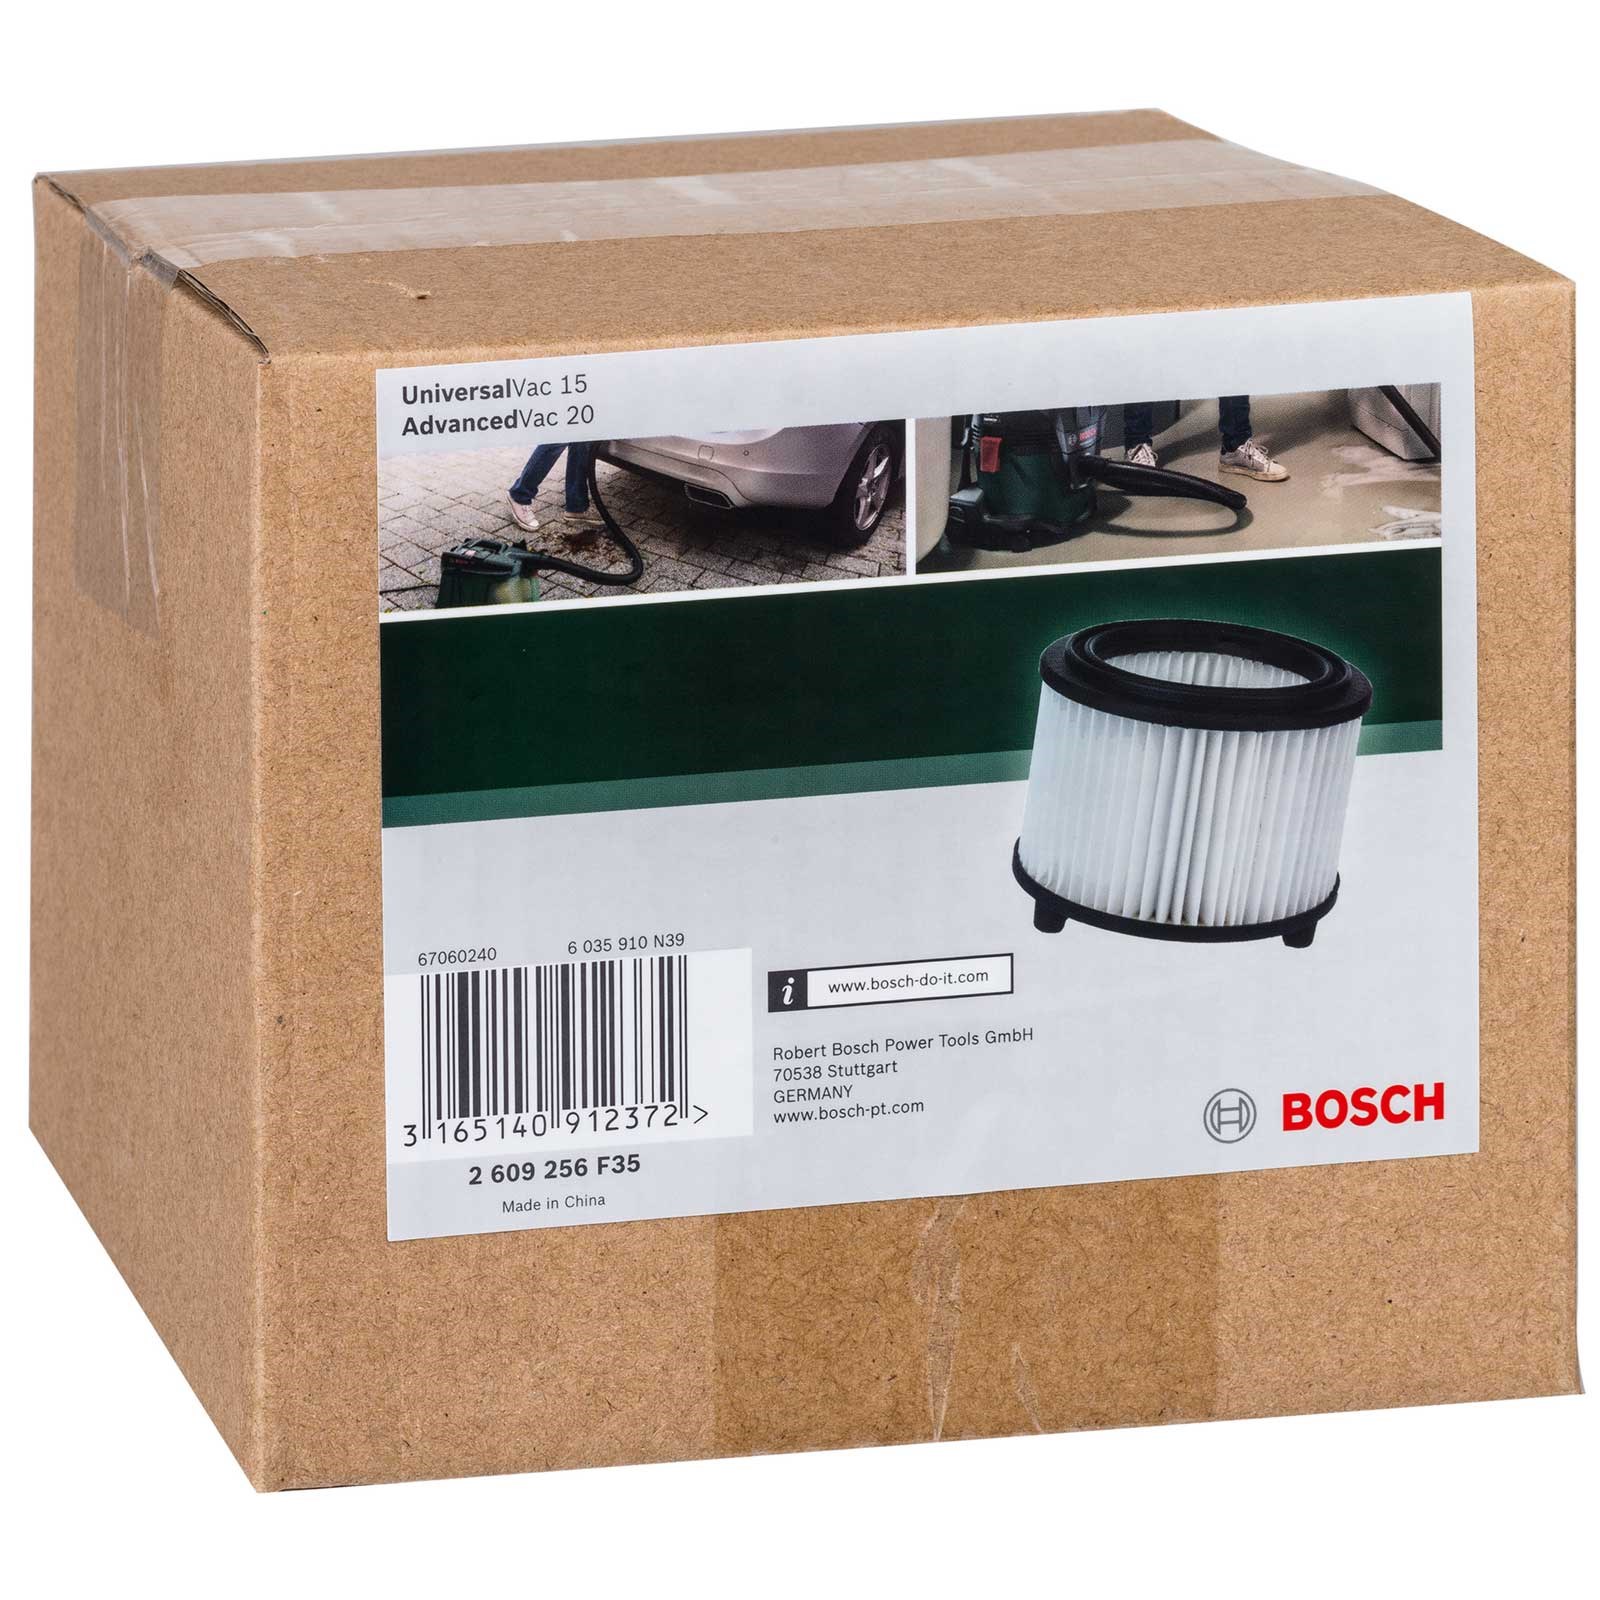 Bosch Cartridge Filter for UNIVERSALVAC 15 Vacuum Cleaner